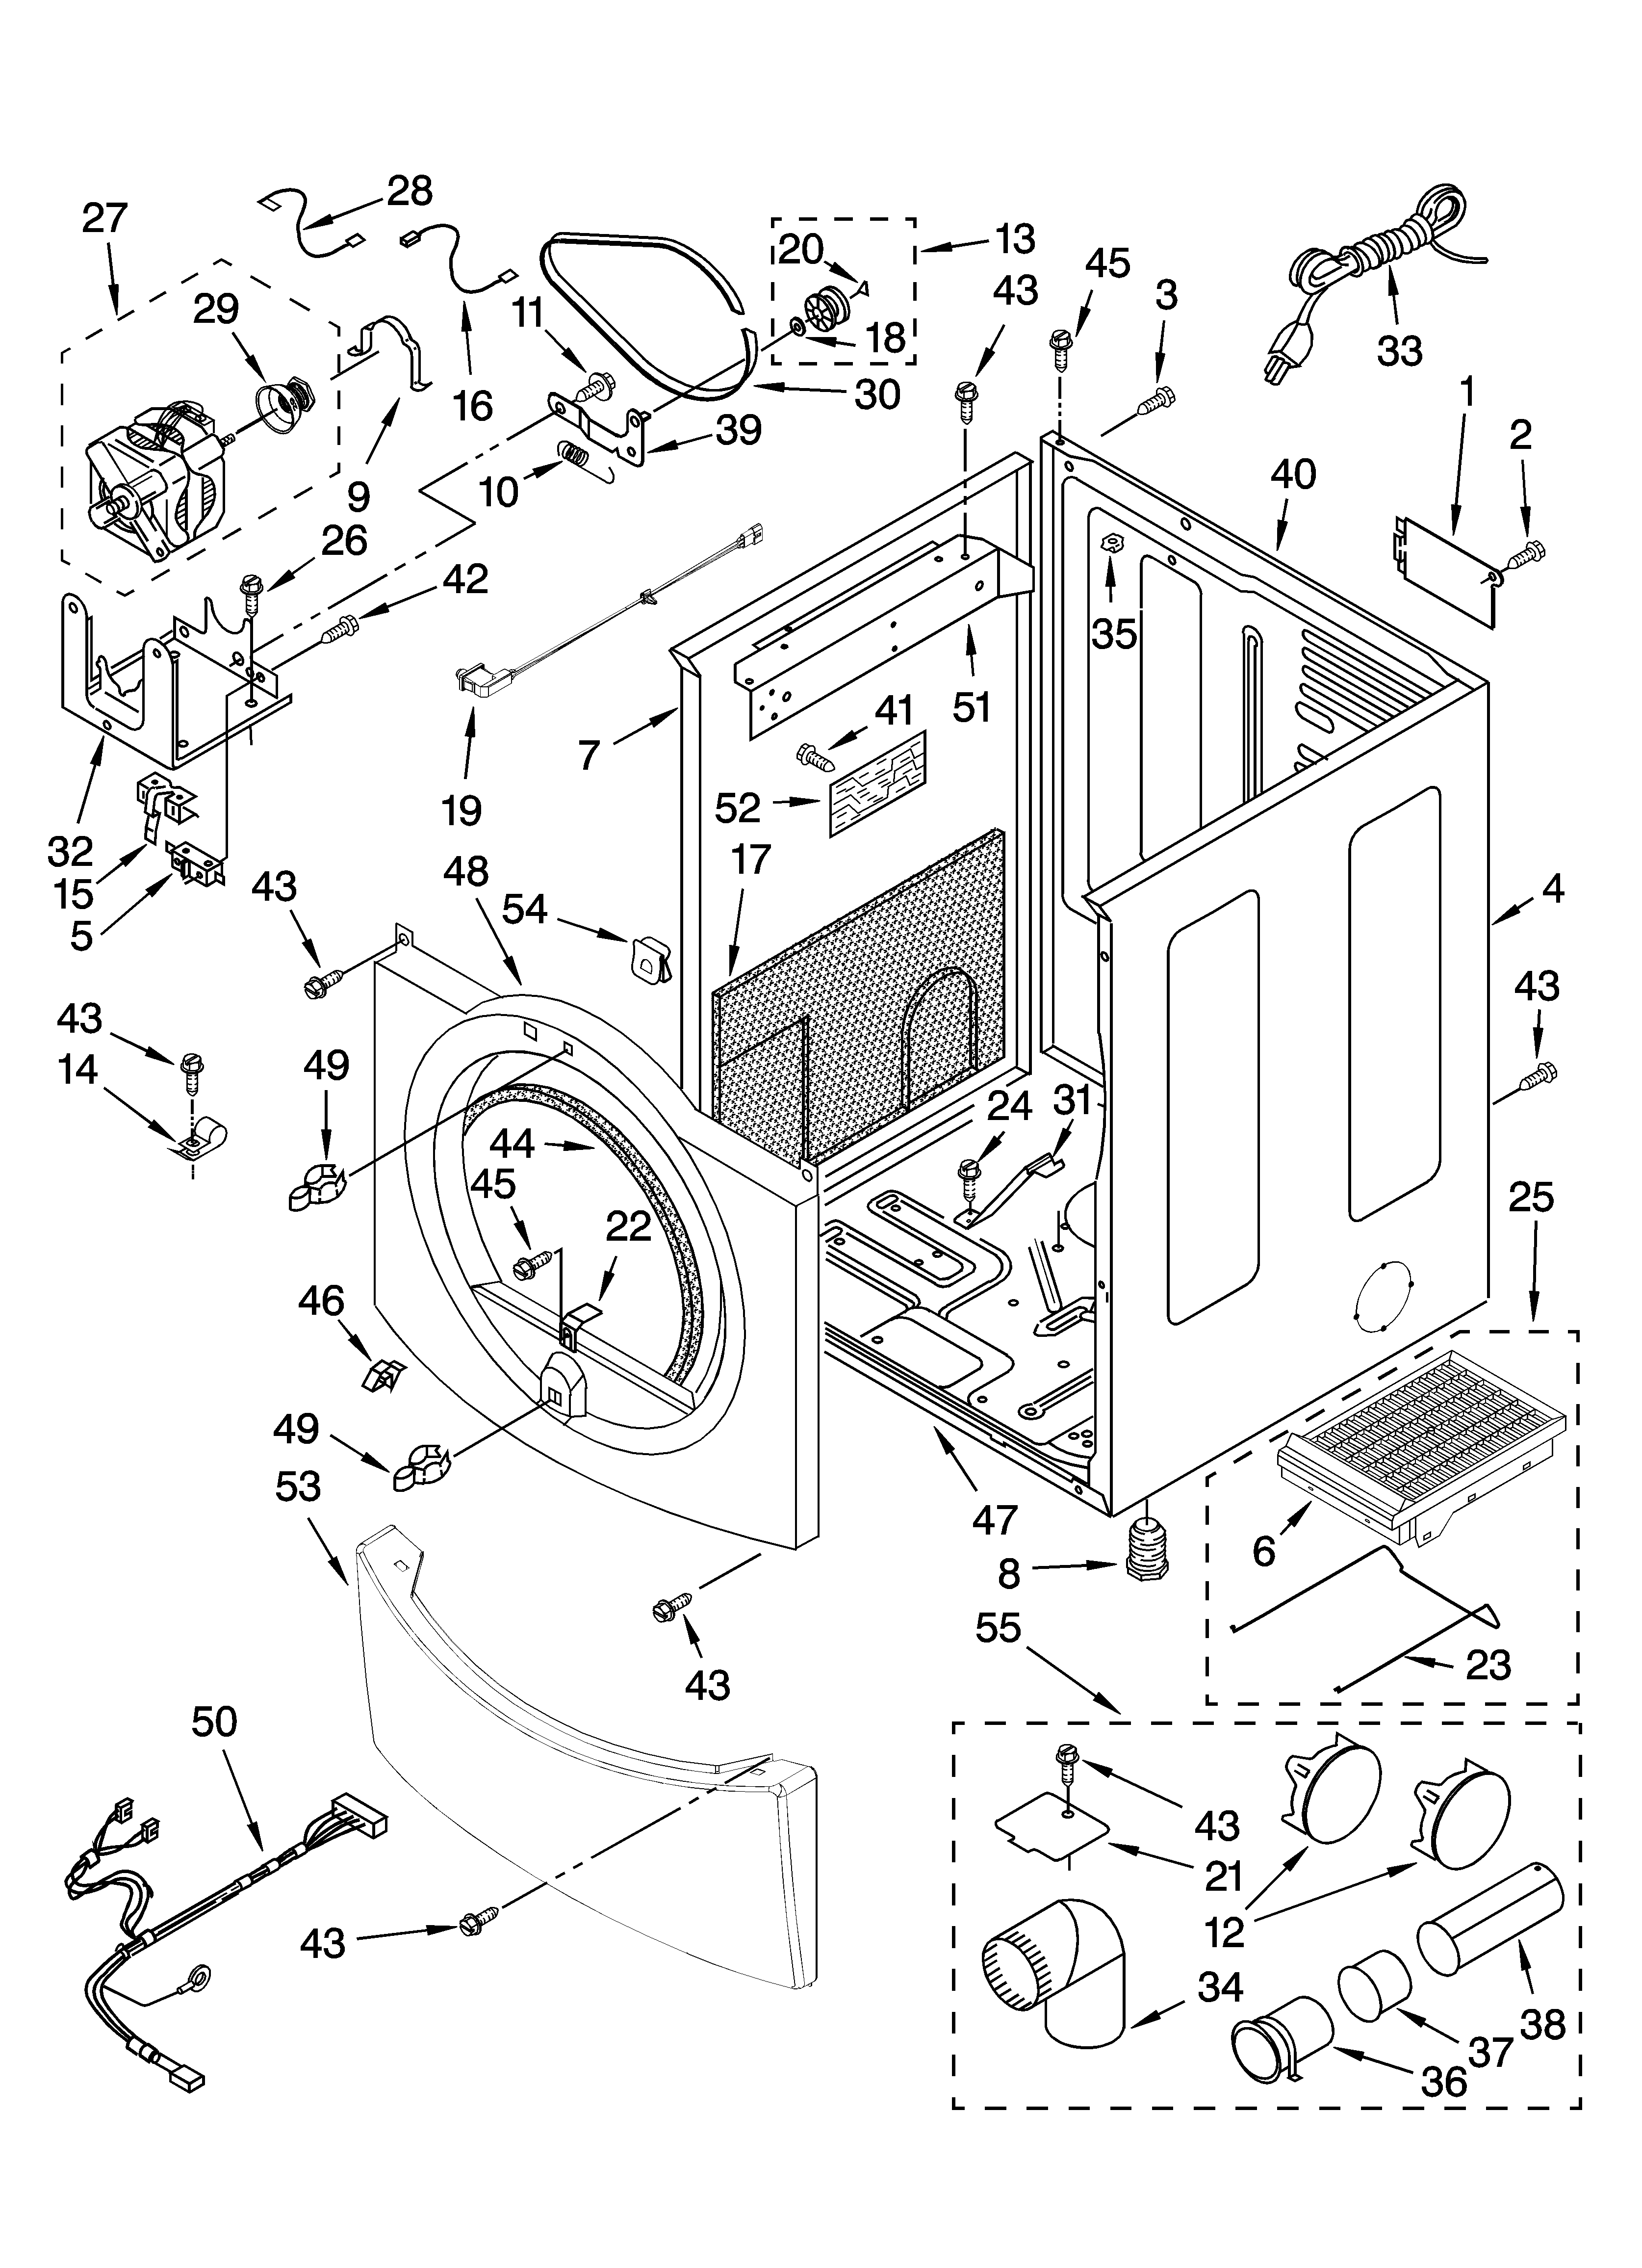 Maytag Electric Dryer Wiring Diagram : Maytag Dryer Wiring Schematic